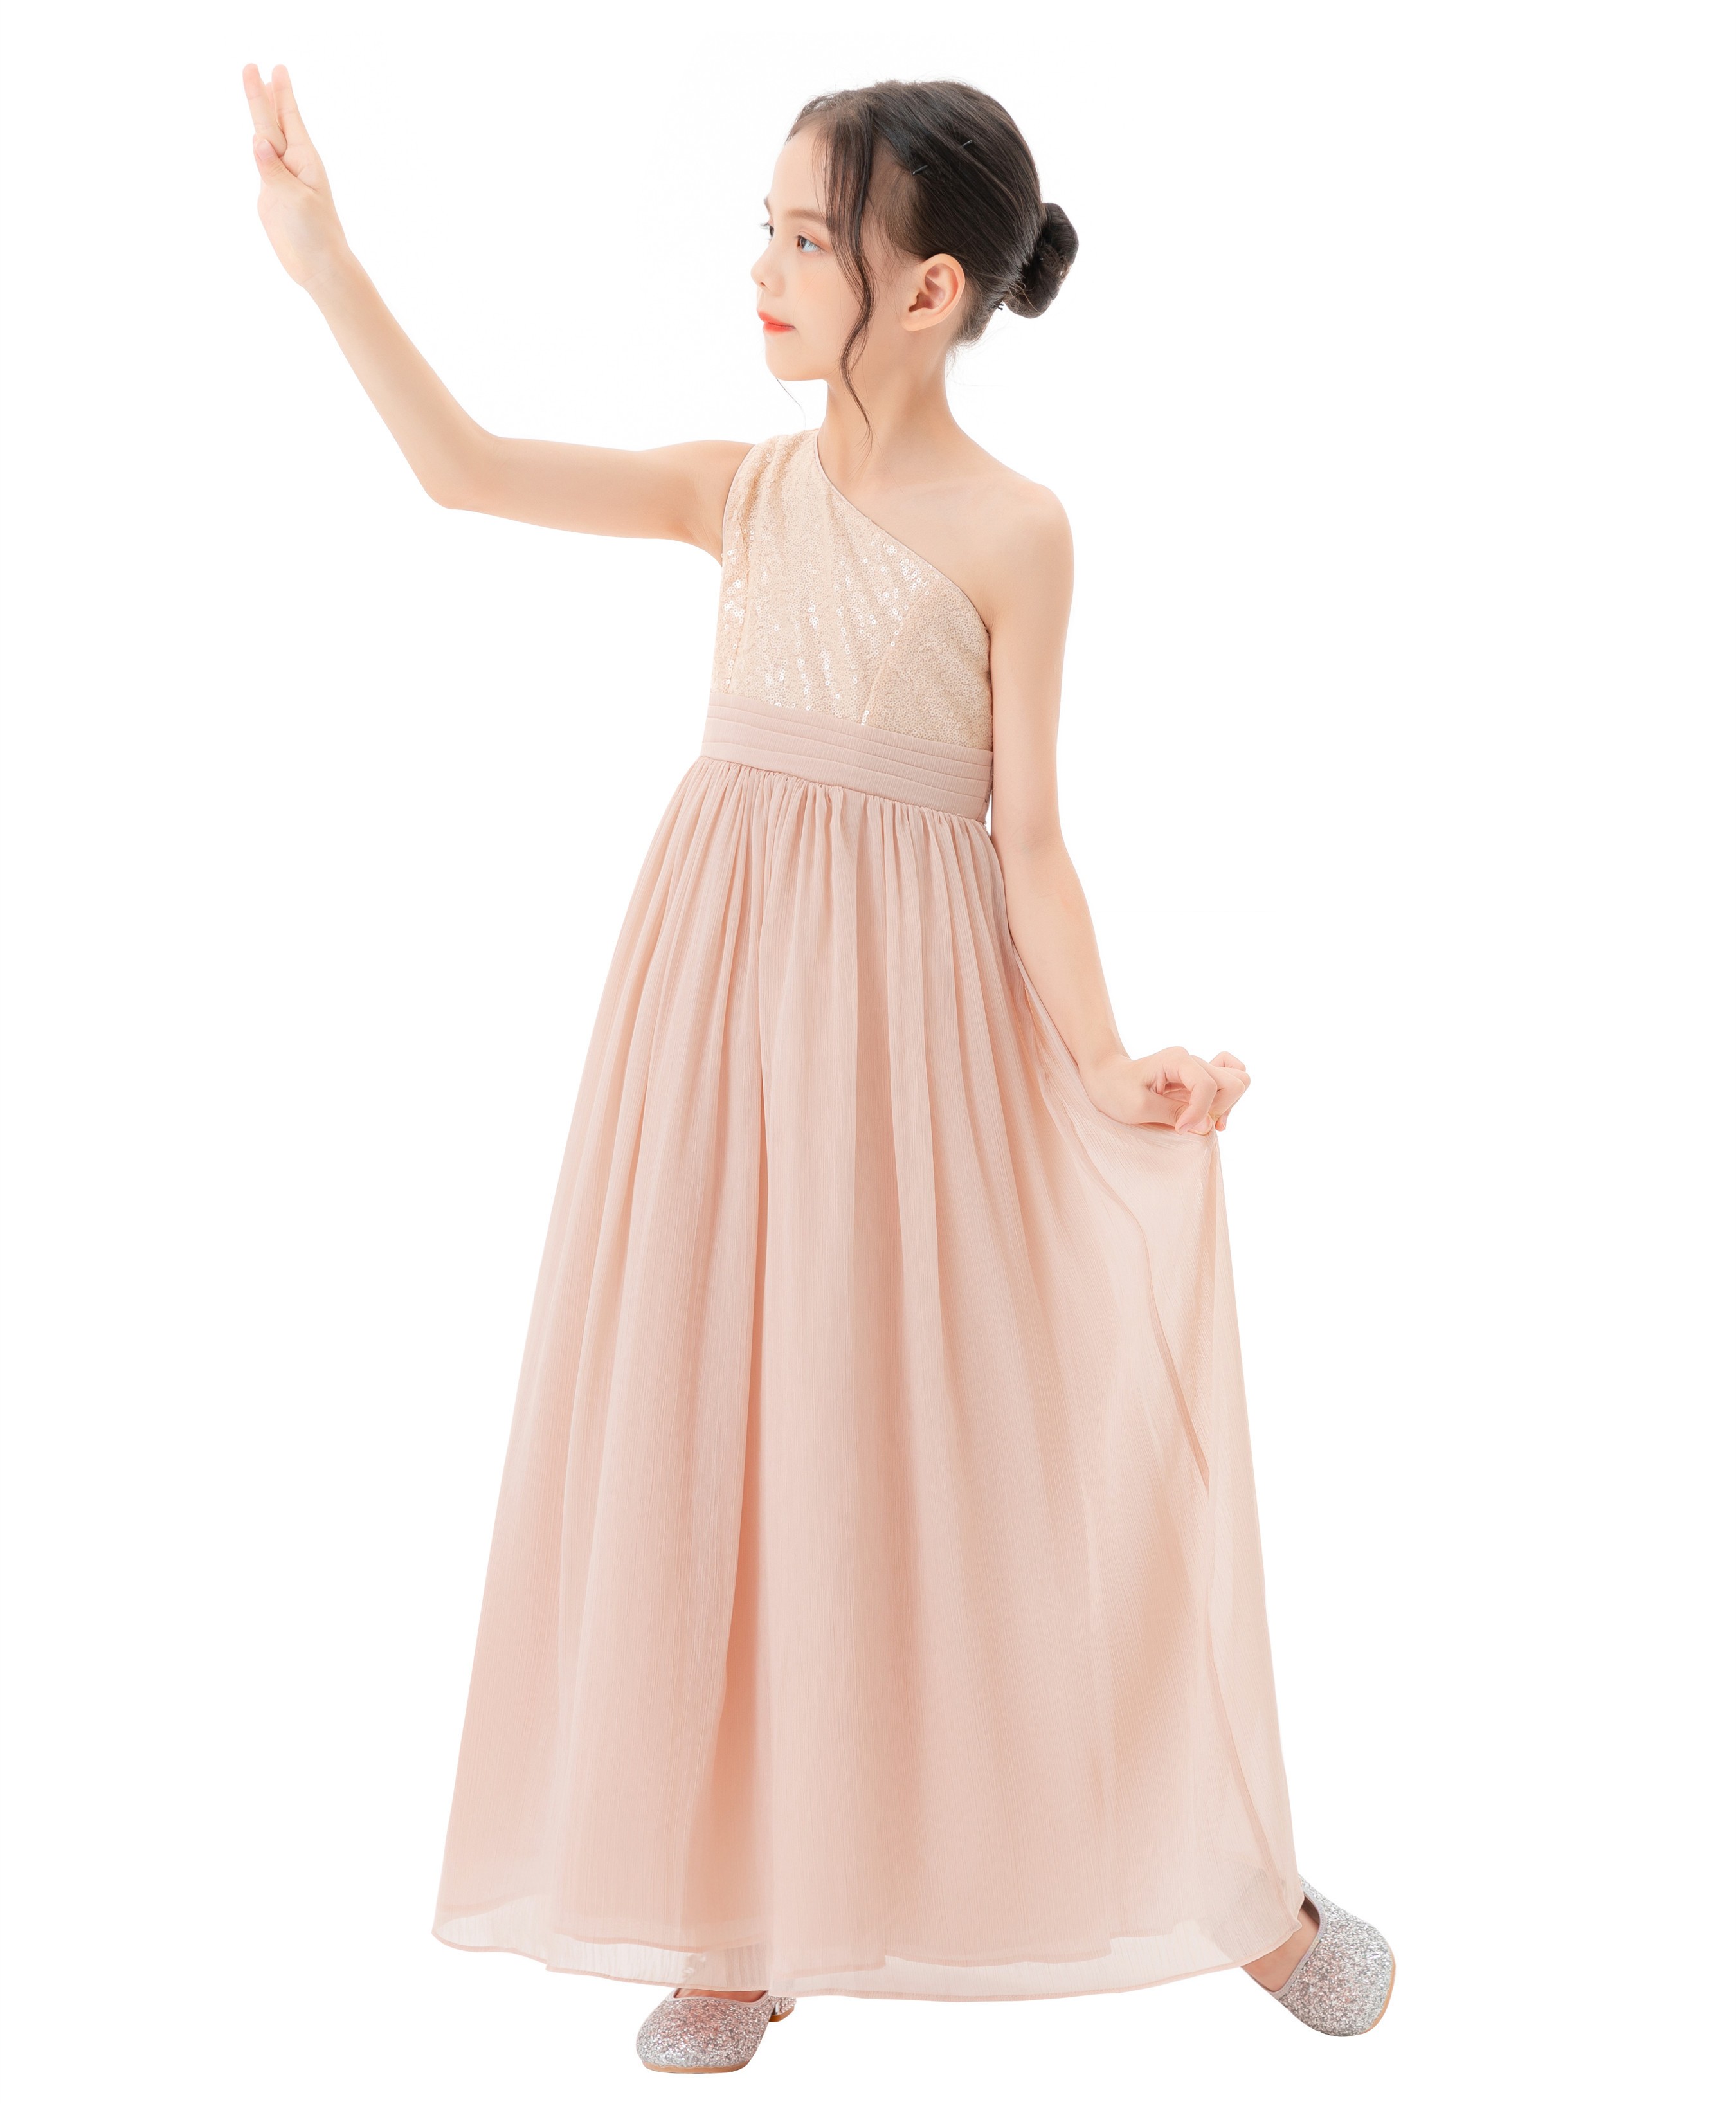 Blush Pink One Shoulder Chiffon Flower Girl Dress 328